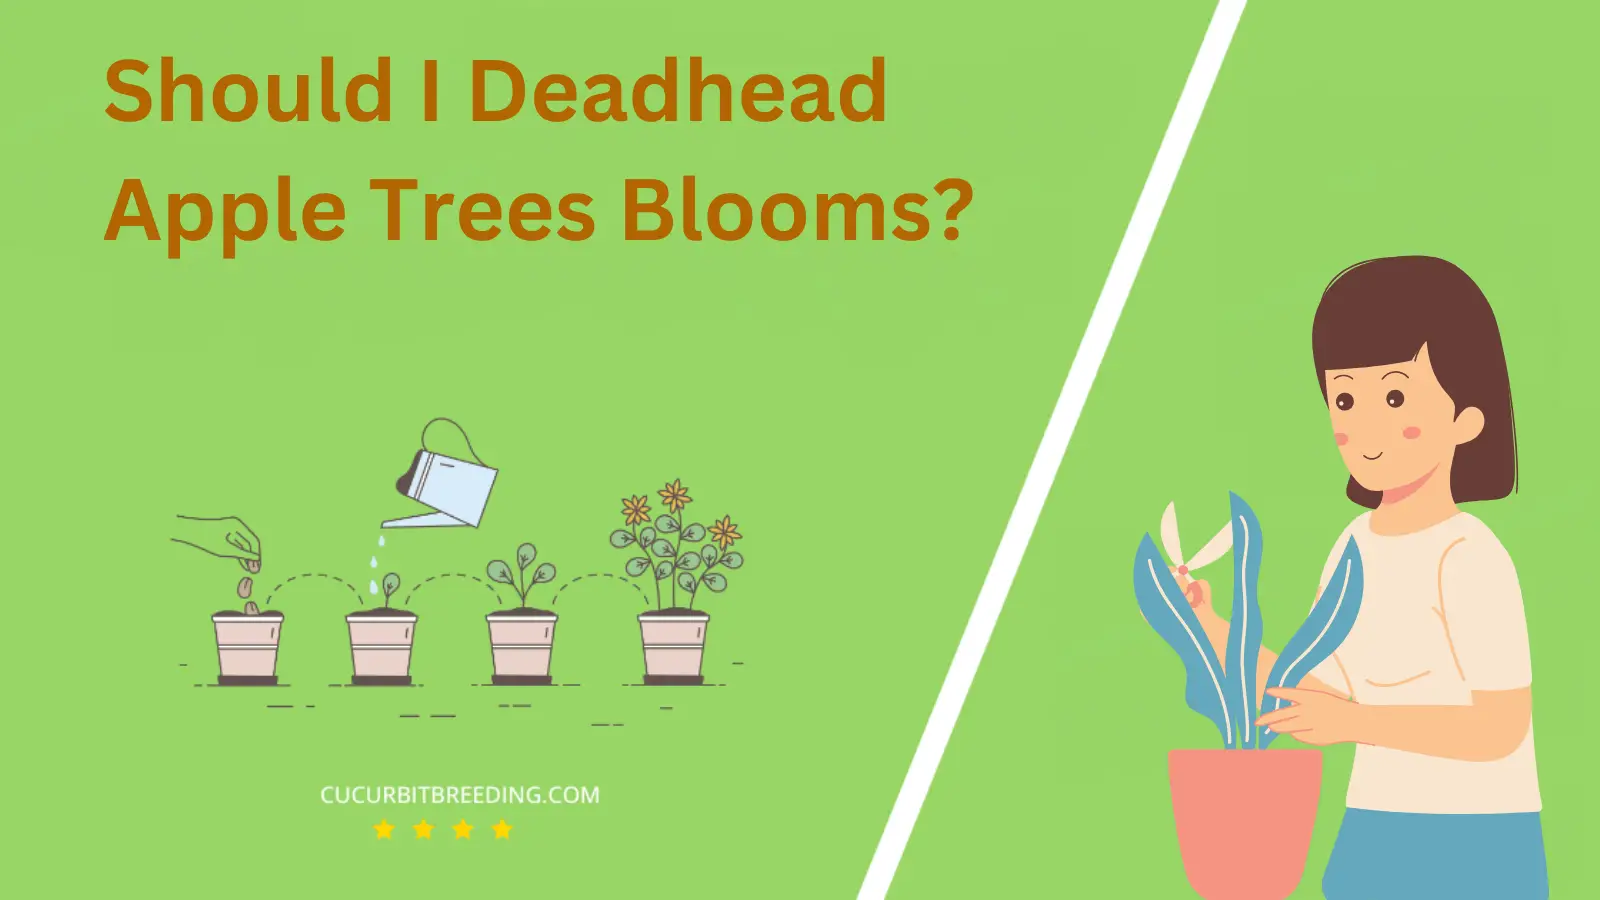 Should I Deadhead Apple Trees Blooms?